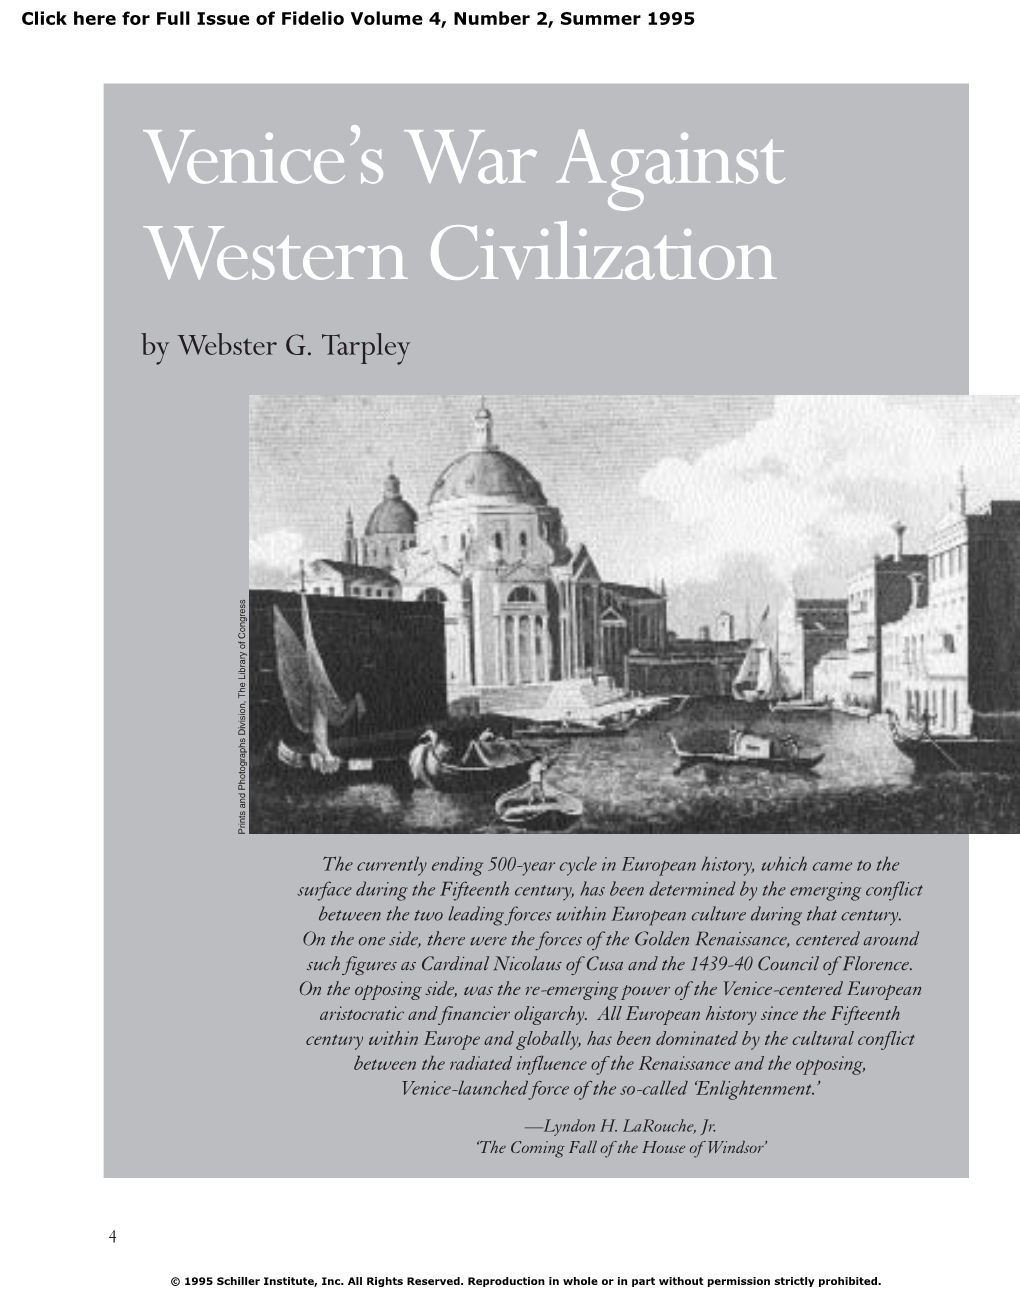 Venice's War Against Western Civilization